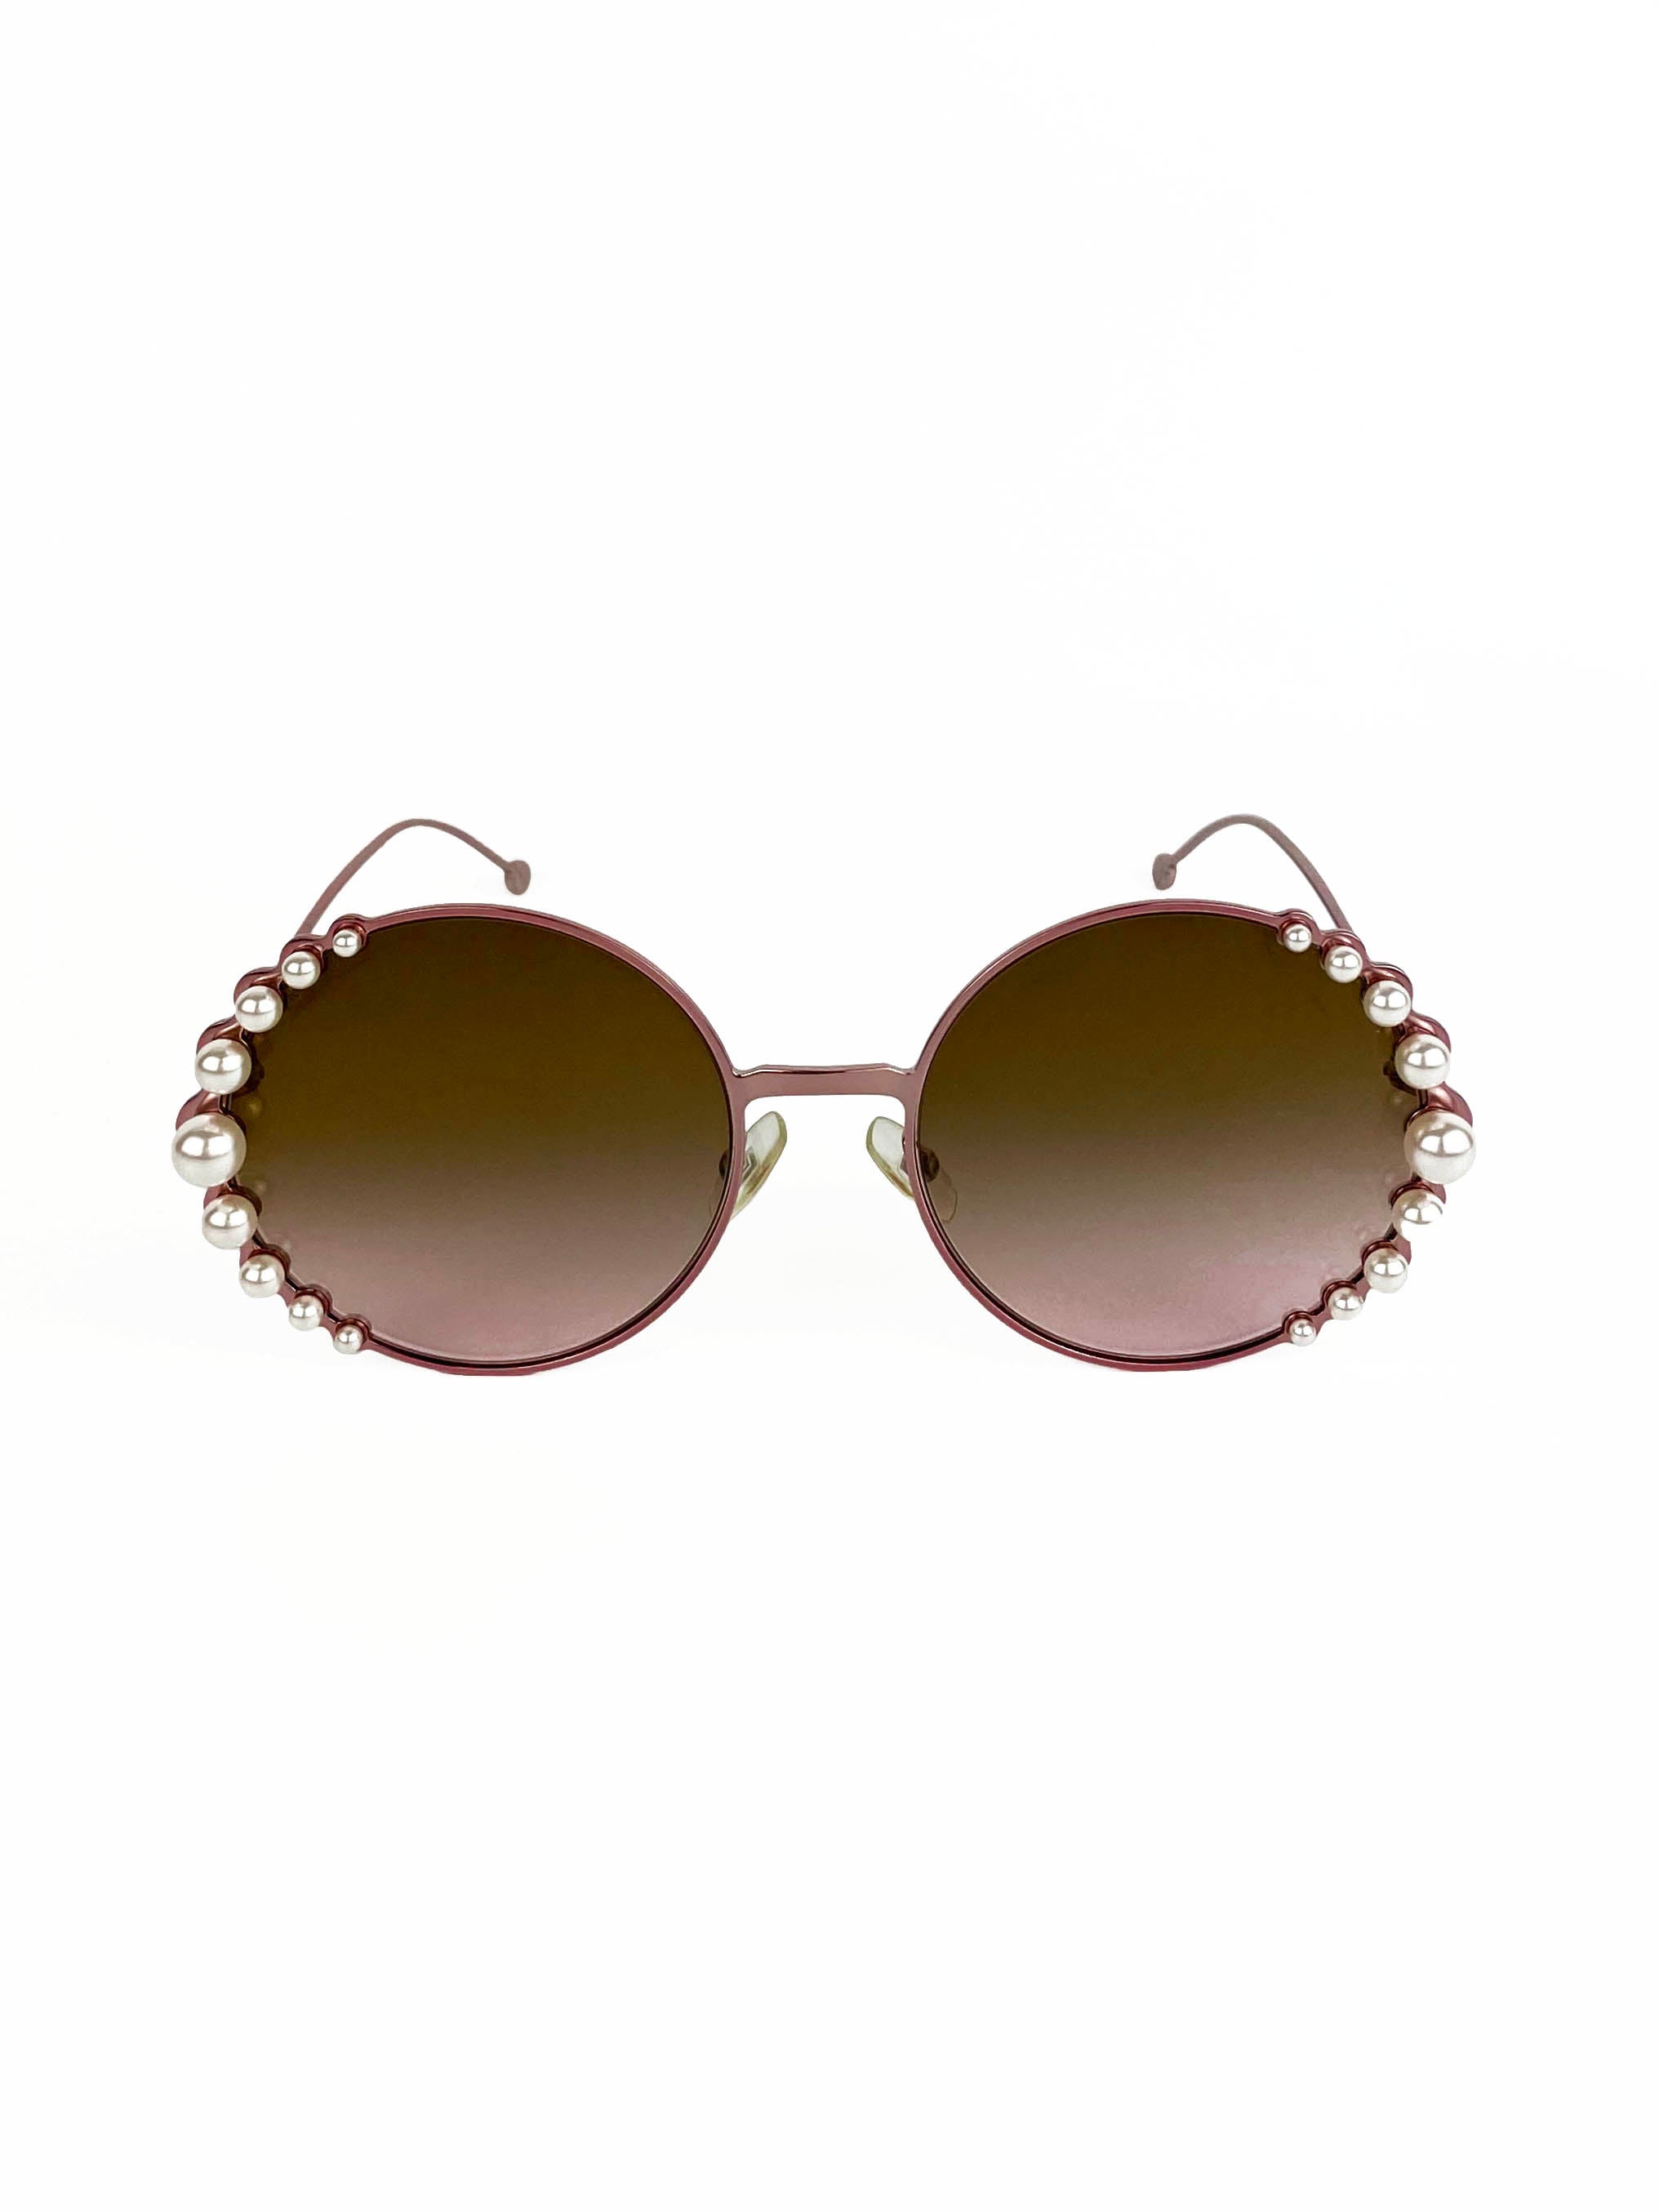 fendi-sunglasses-1.jpg